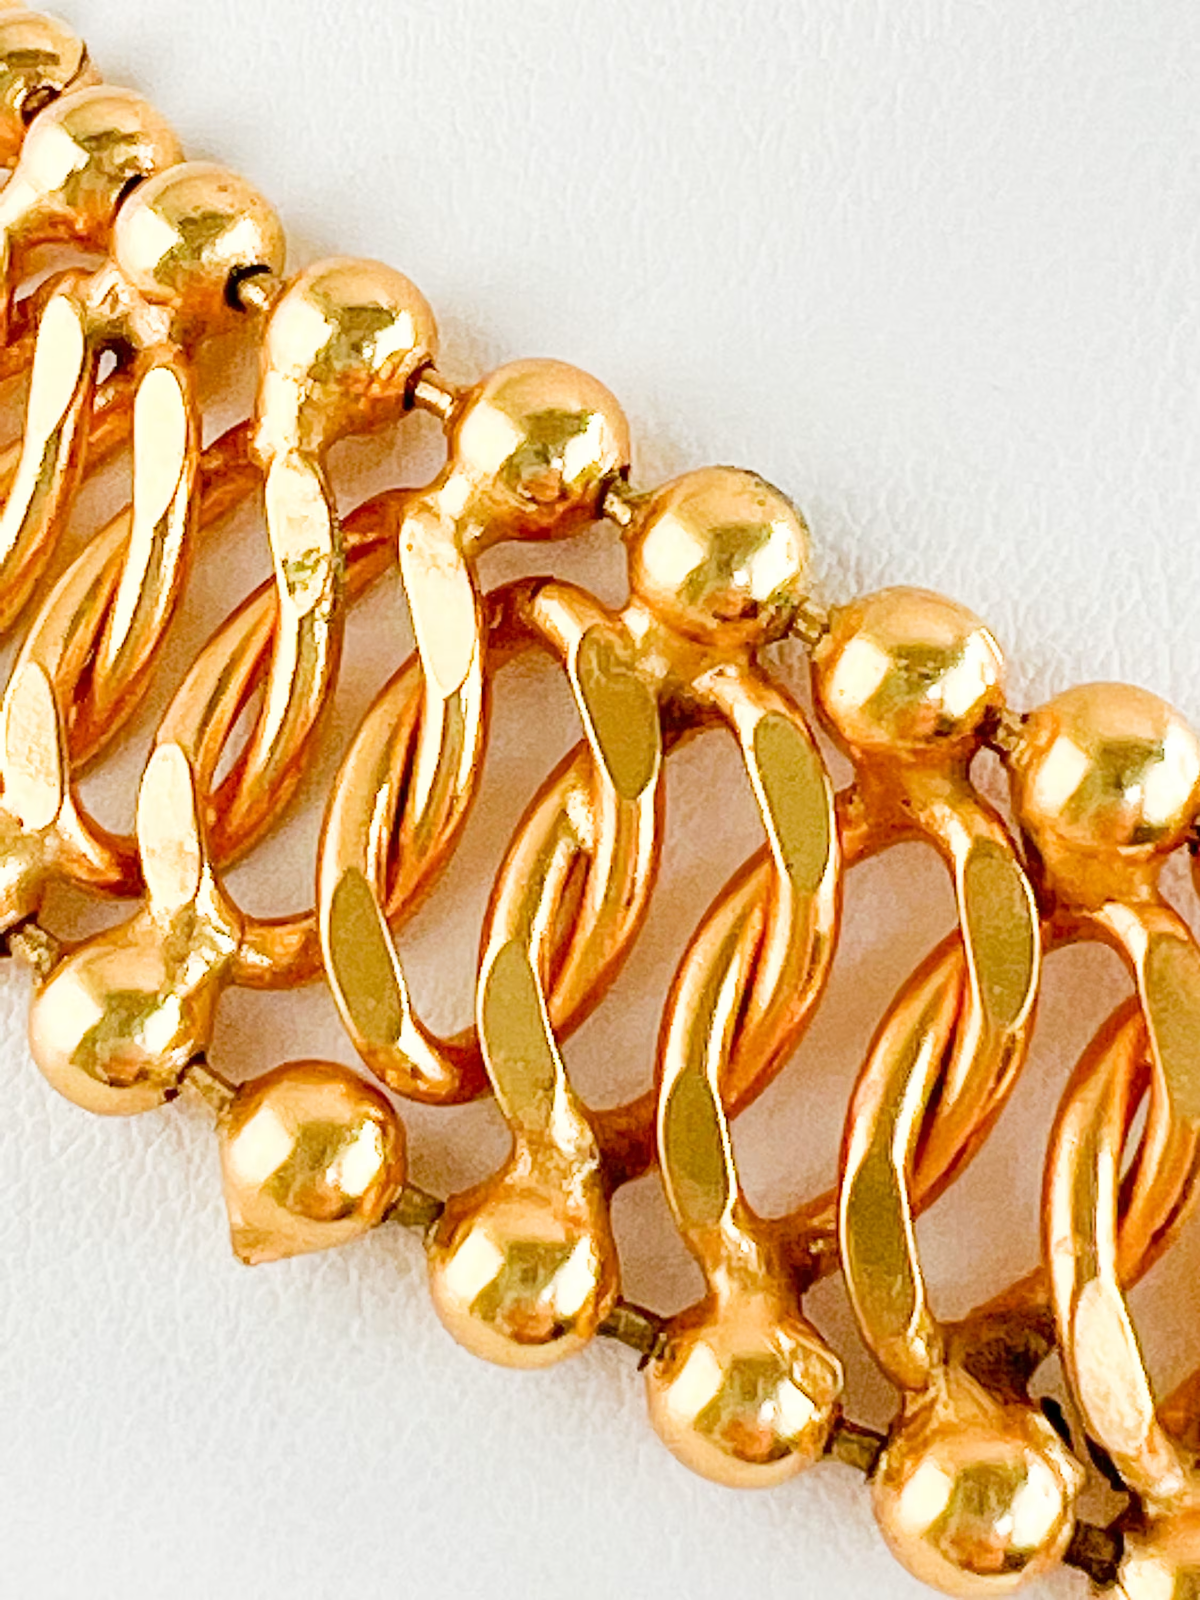 Vintage Celine Necklace, Choker Necklace Gold, Vintage Necklace, Chain Necklace Gold, Made in Italy, Gift for women, Bridesmaid Necklace